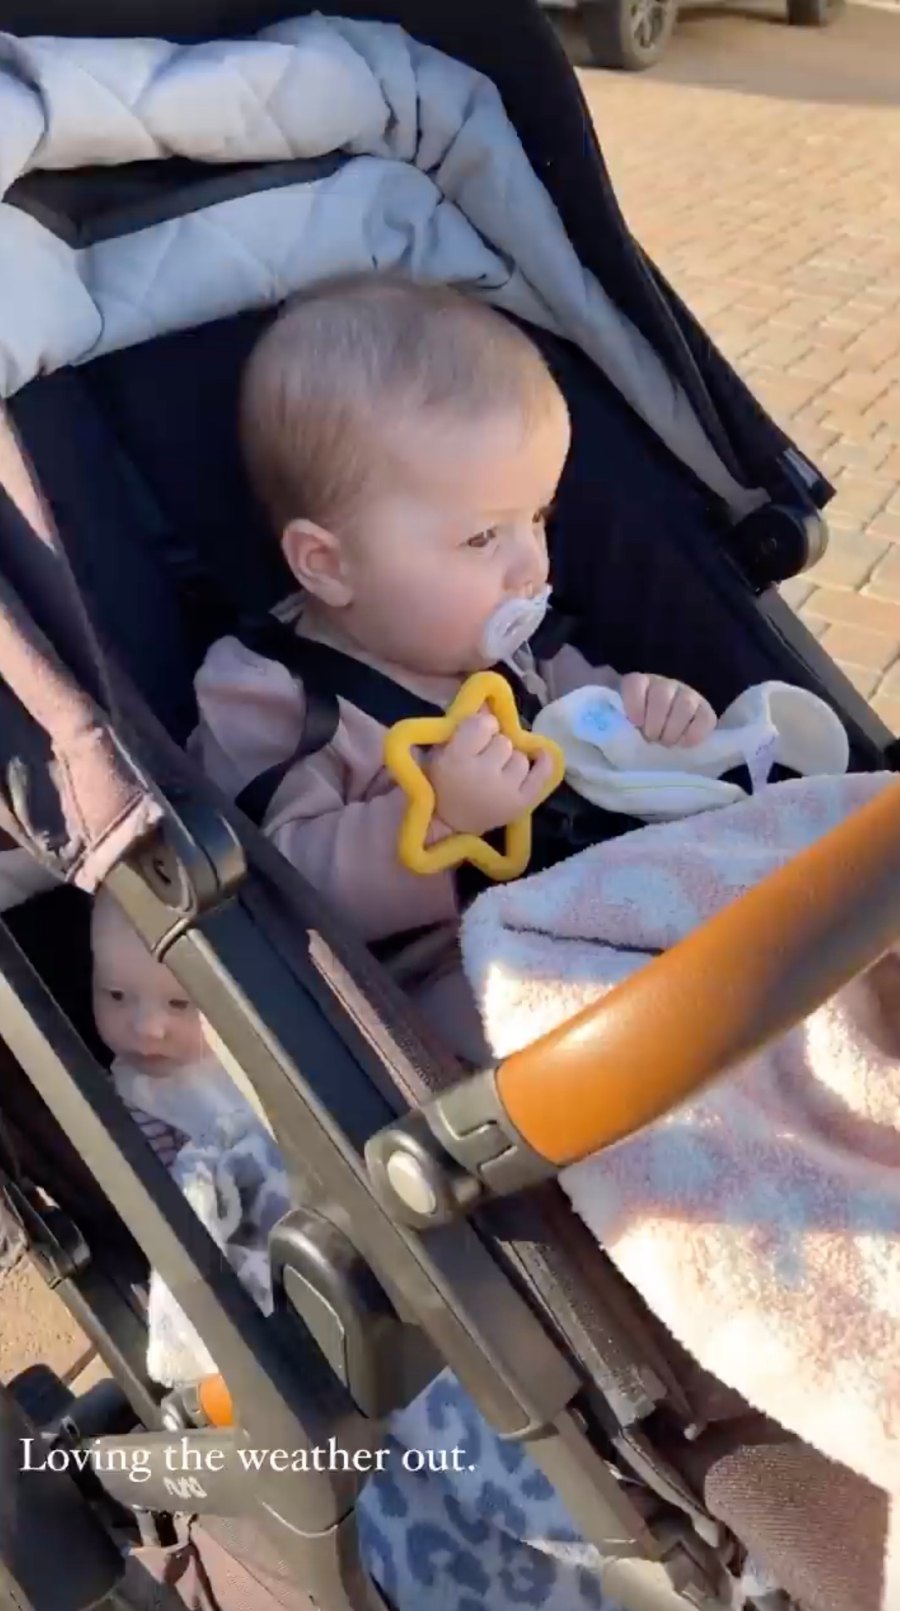 Arie and Lauren's Daughter Senna and Son Lux's Baby Album Sidewalk Sweeties